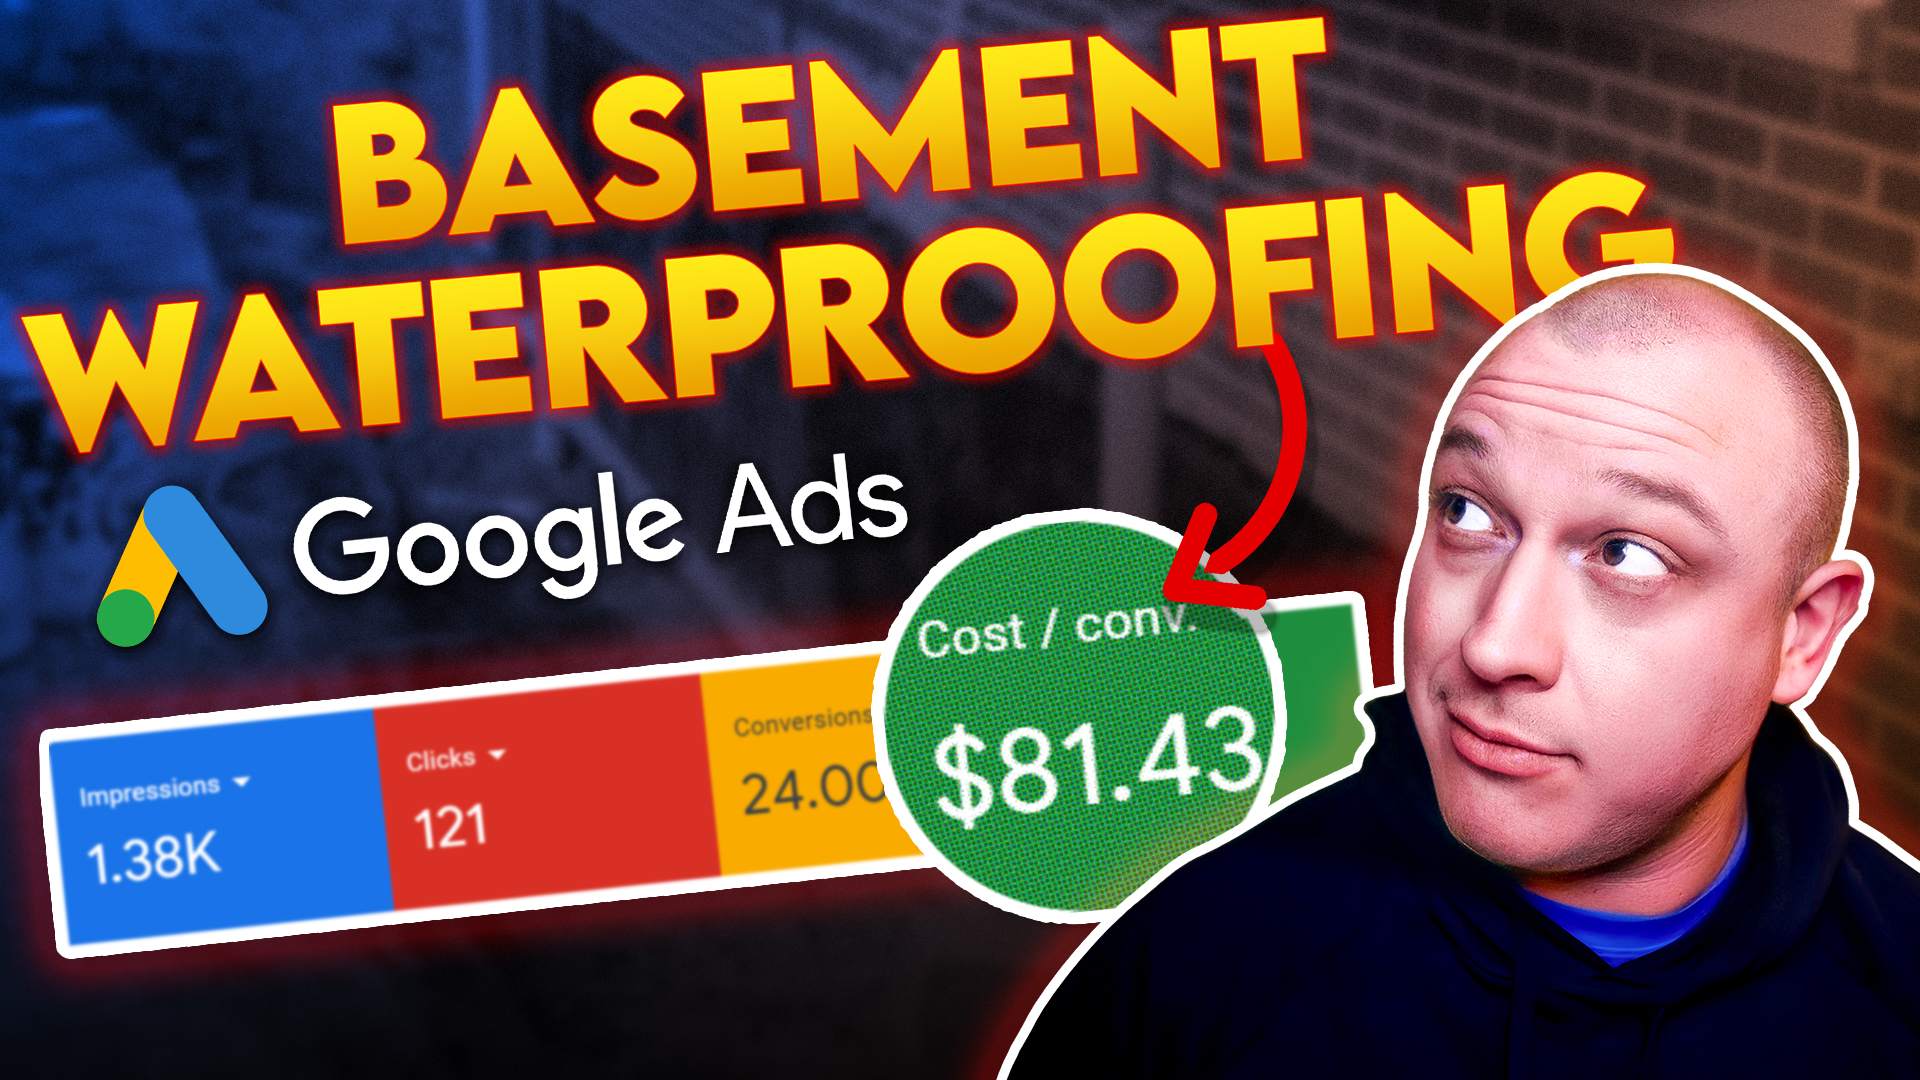 basement waterproofing google ads ppc